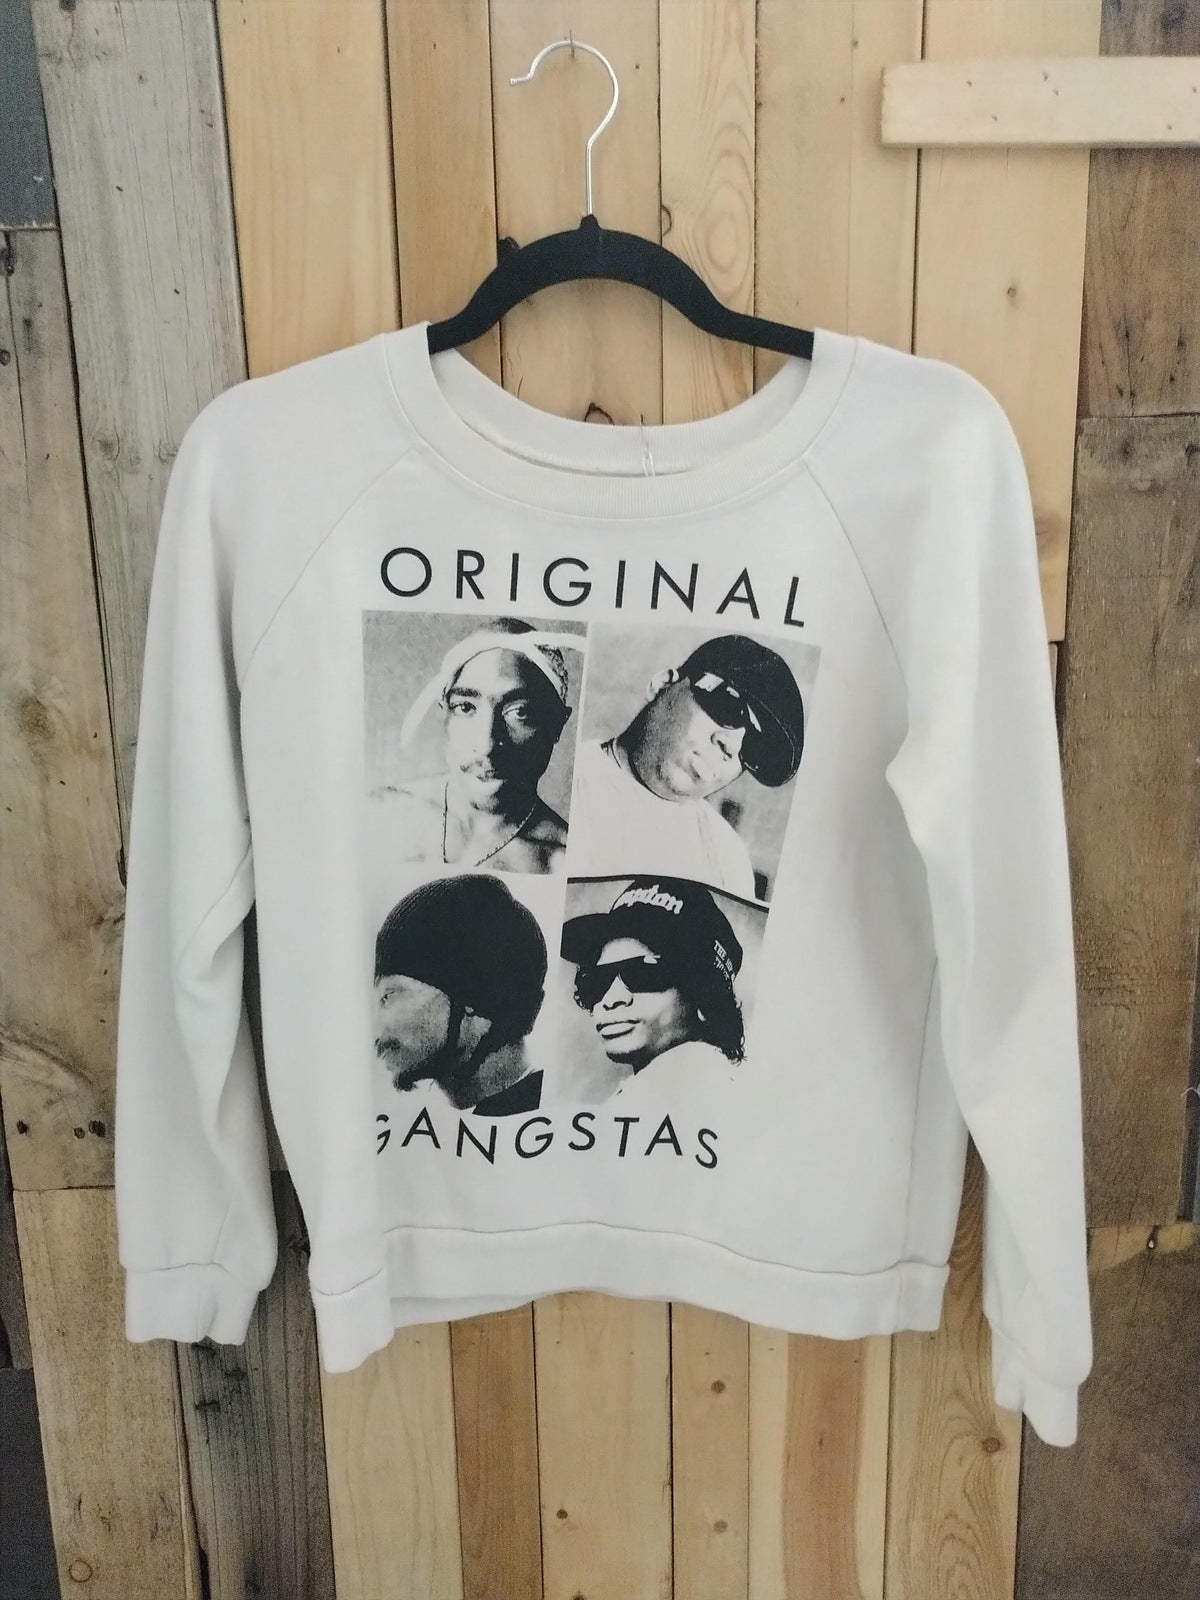 Original Gangstas Sweatshirt Women's Size Small AS IS